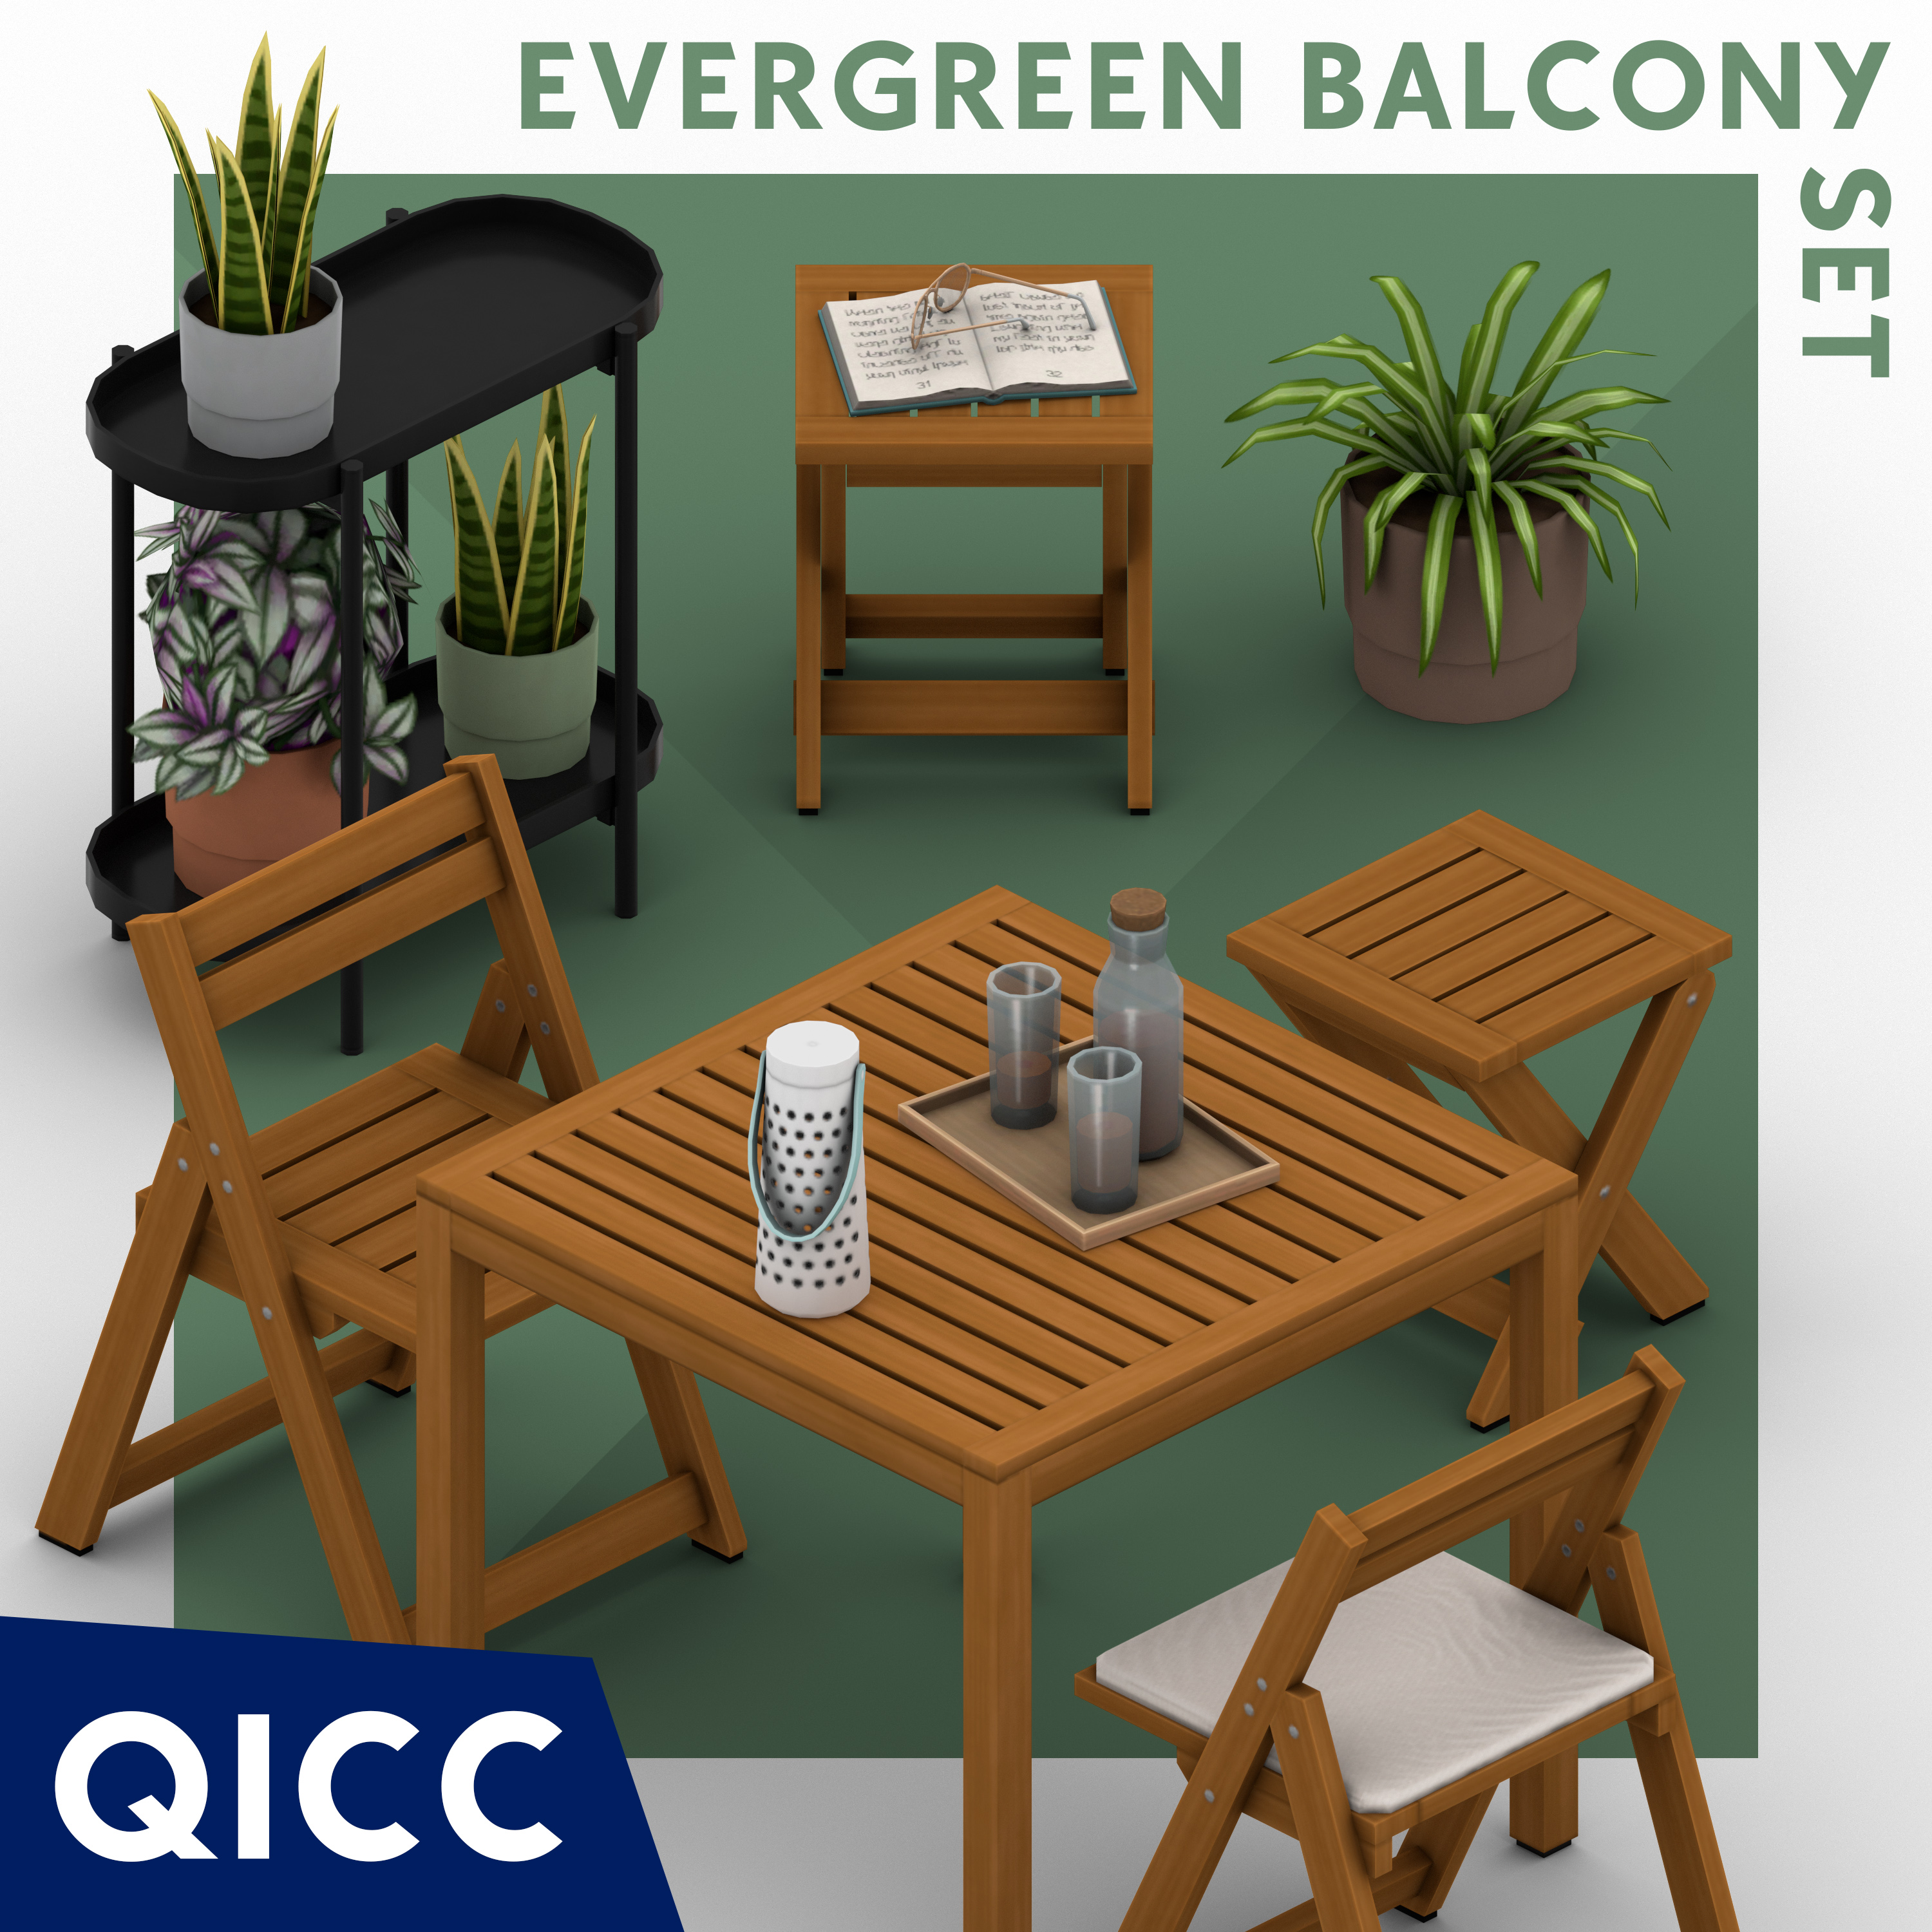 QICC - Evergreen Balcony Set project avatar